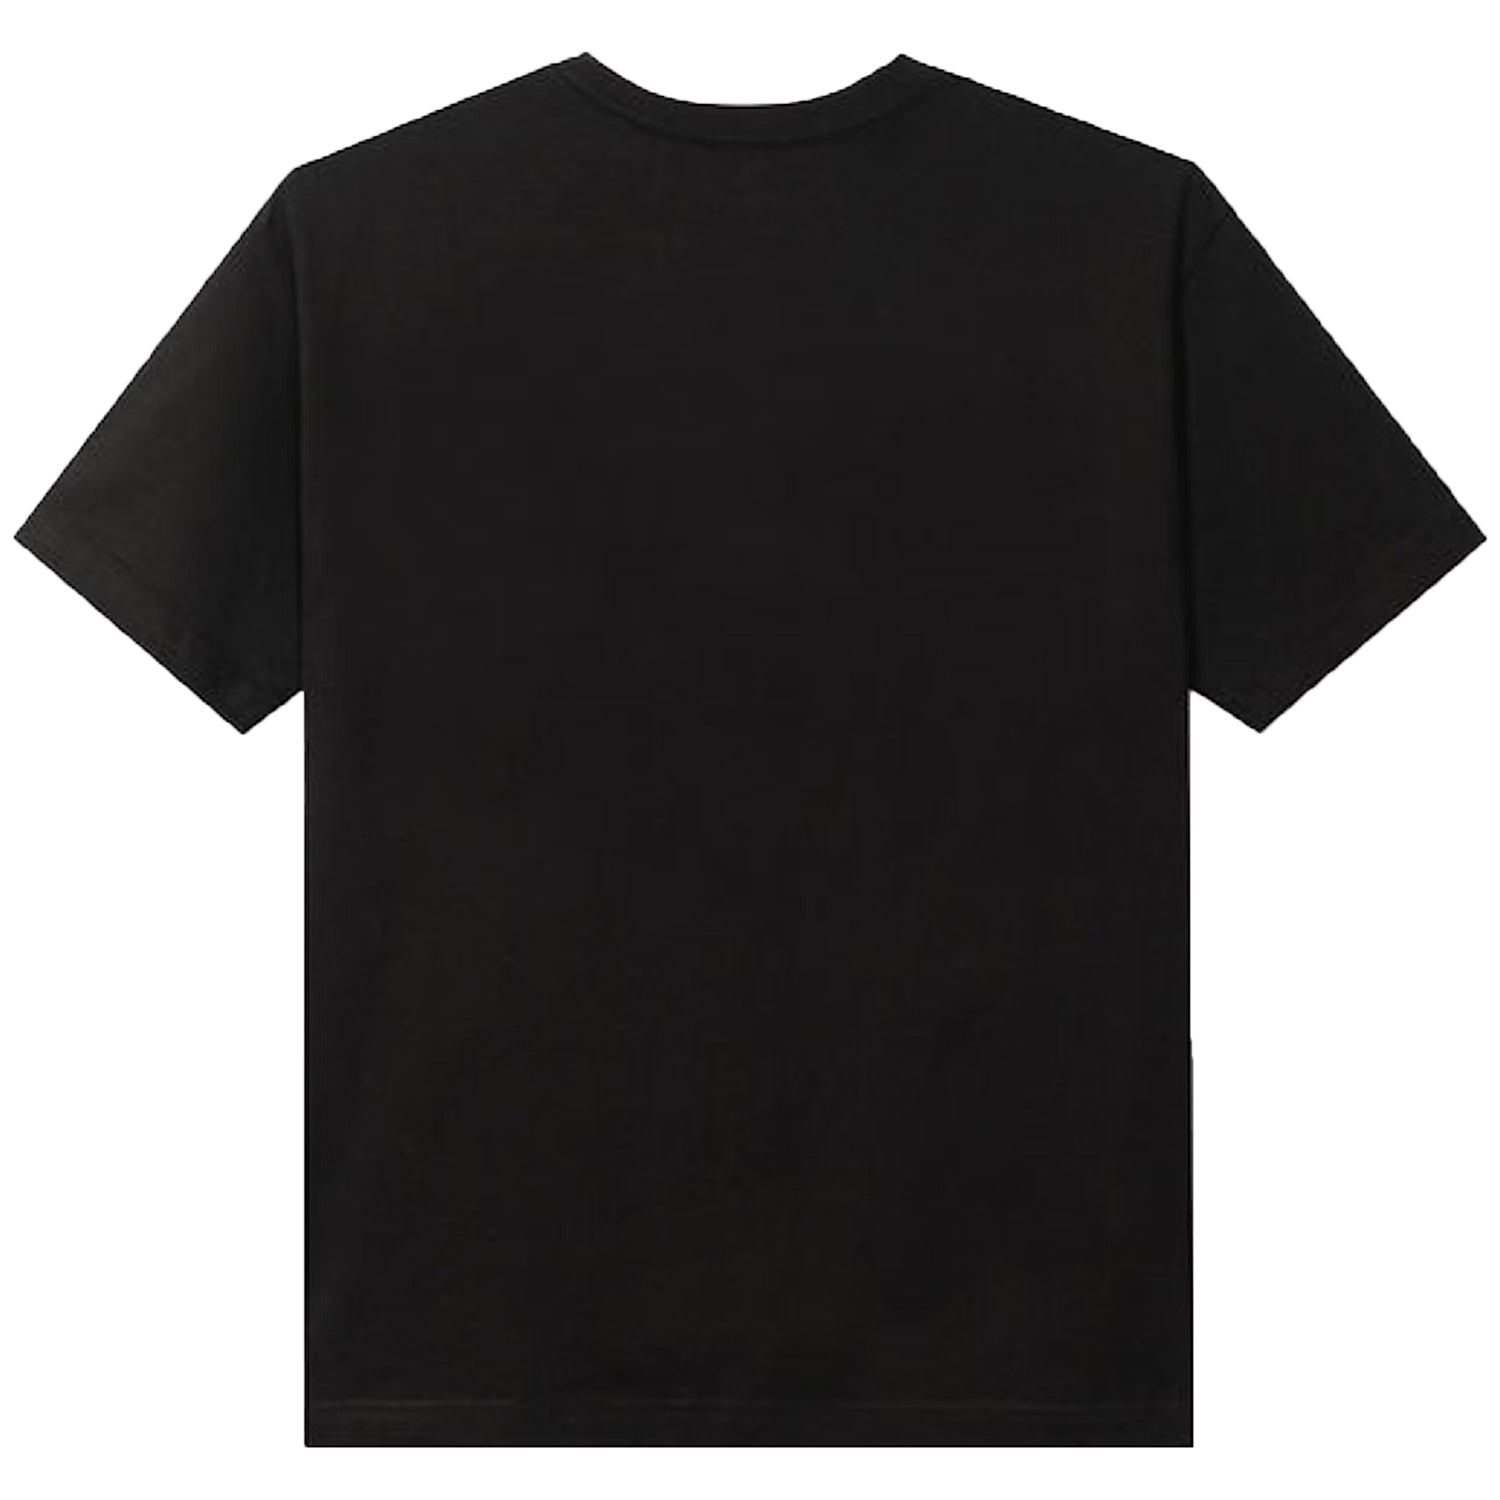 Anti Social Social Club Origin Story T-shirt Black